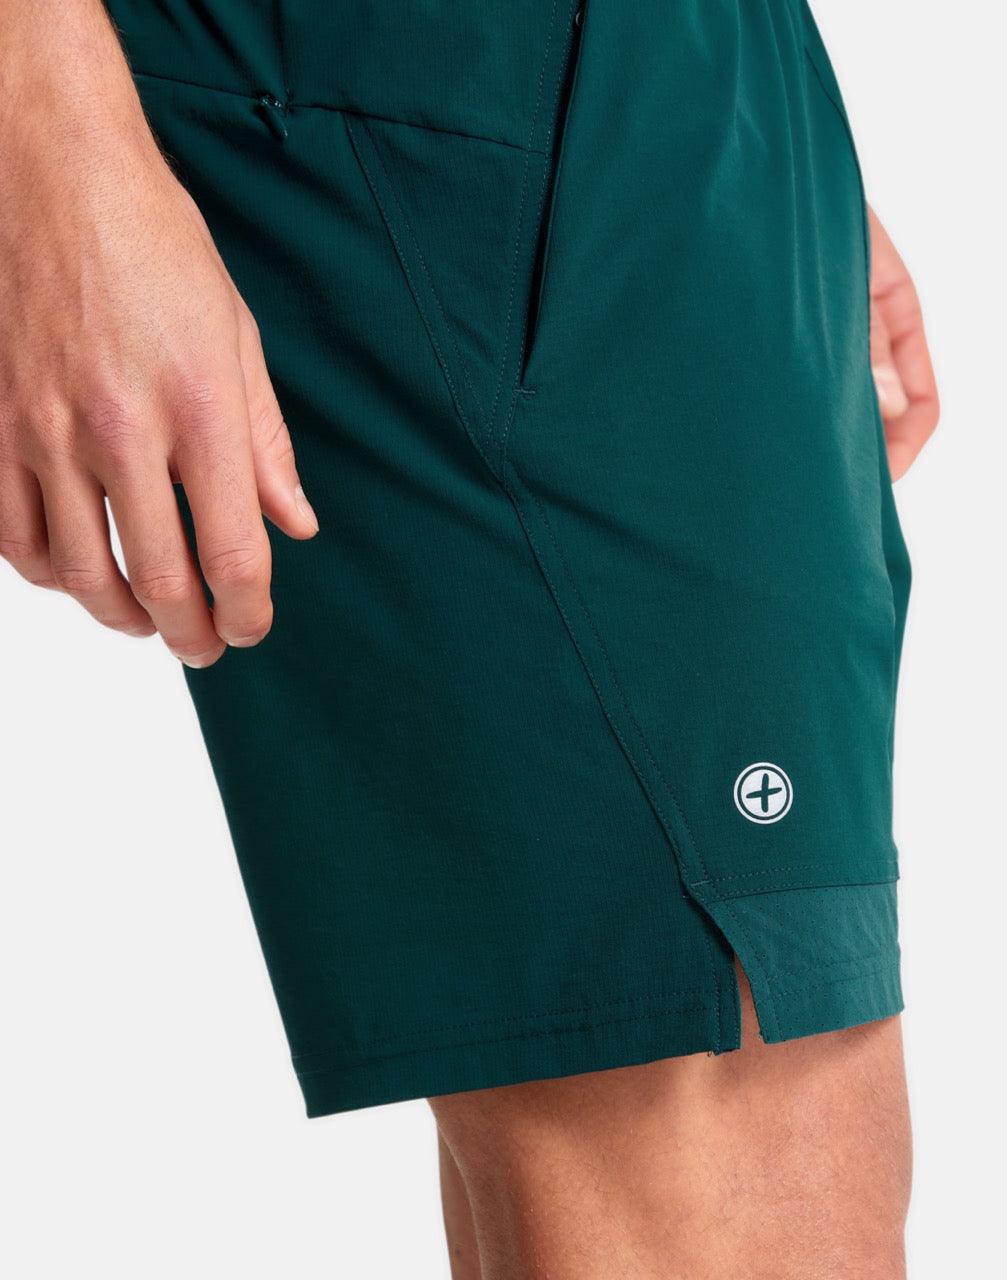 Celero Shorts in Pine Green - Shorts - Gym+Coffee